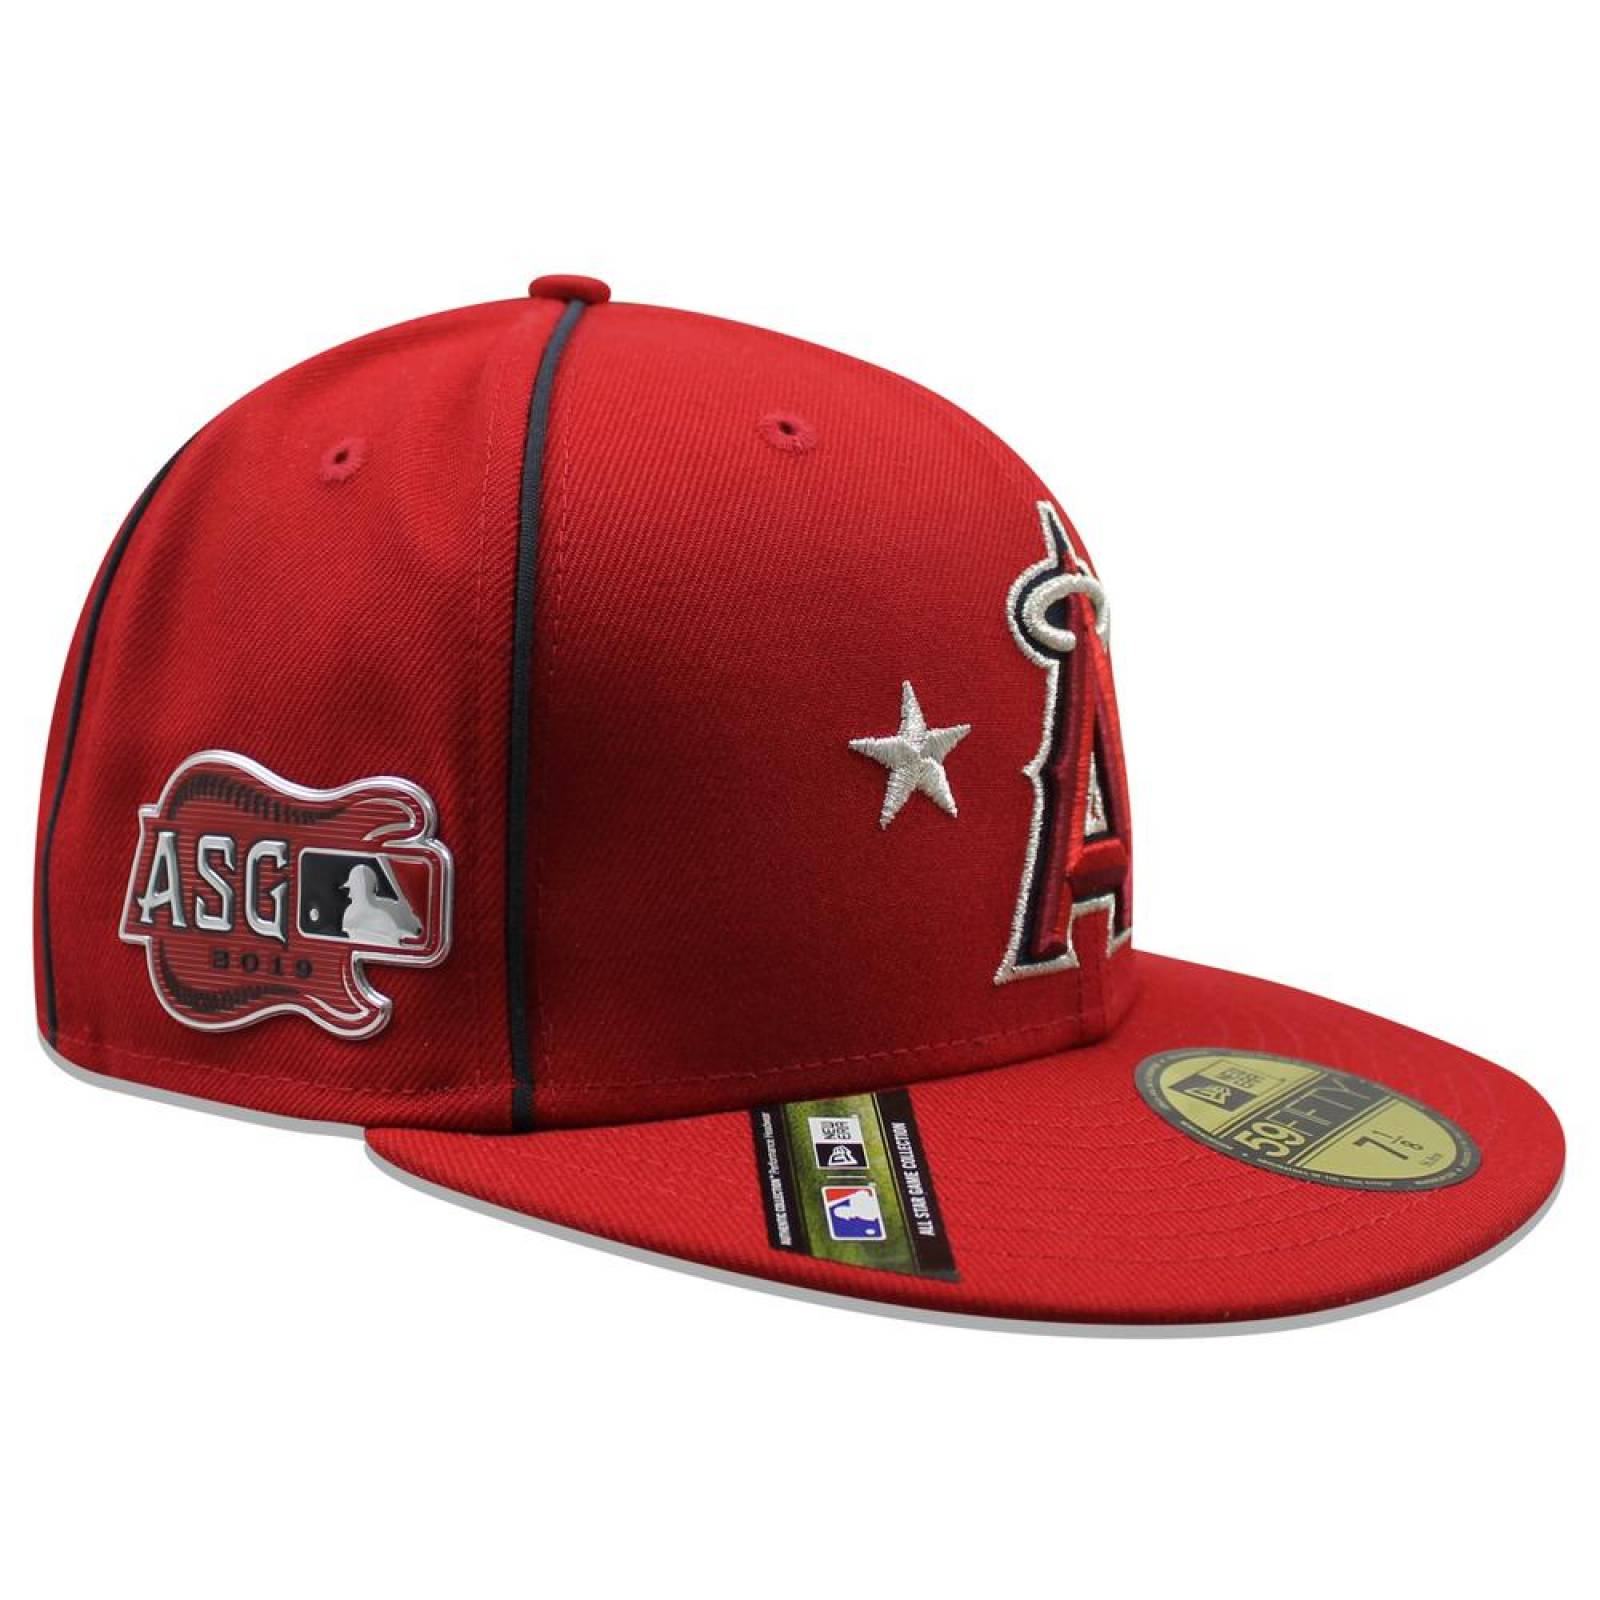 Gorra New Era 59 Fifty MLB Angels All Star Game 2019 Rojo 